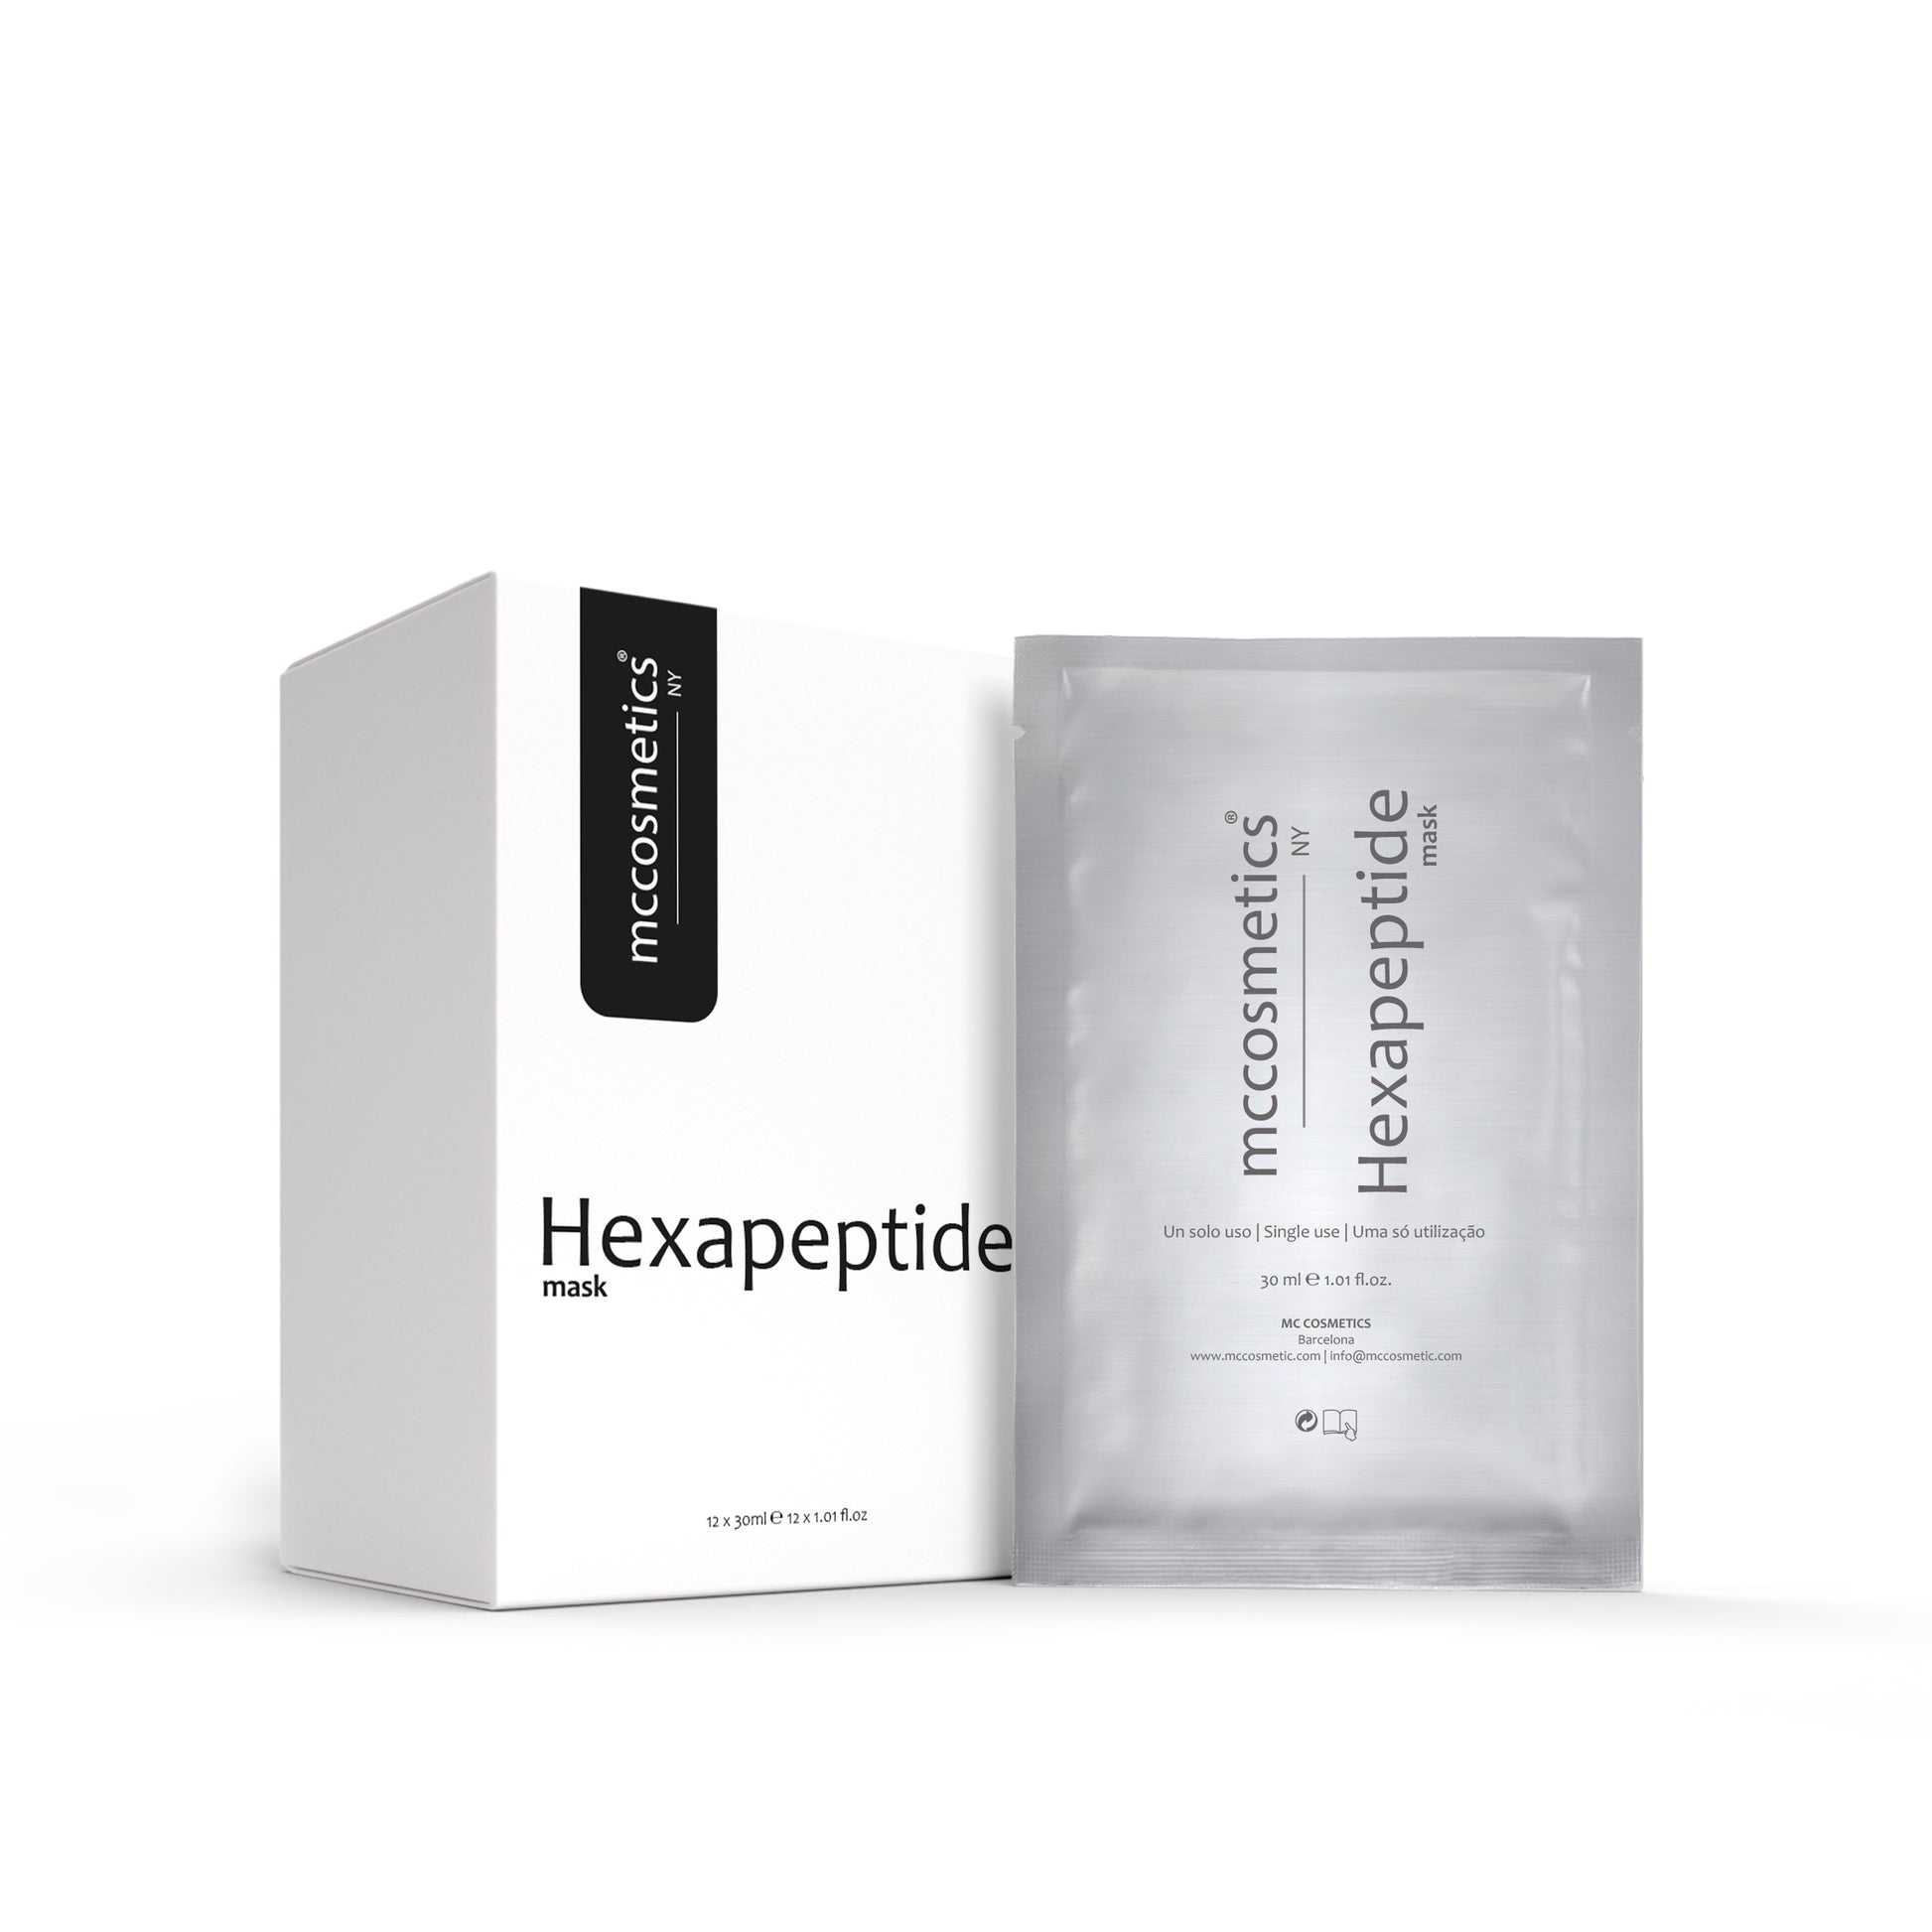 hexapeptide mask - mccosmetics.ny